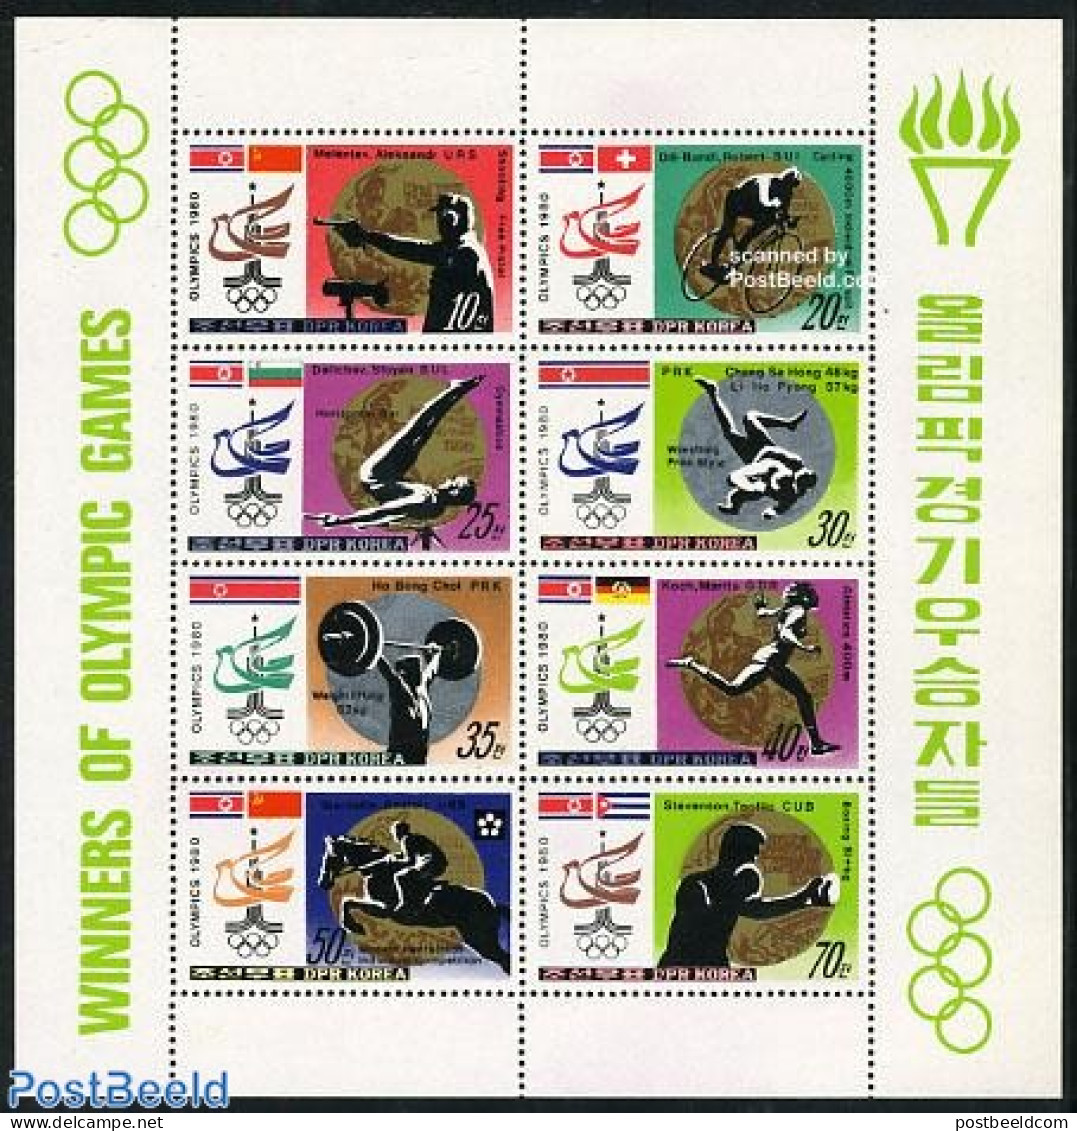 Korea, North 1980 Olympic Winners 8v M/s, Mint NH, Sport - Olympic Games - Corée Du Nord